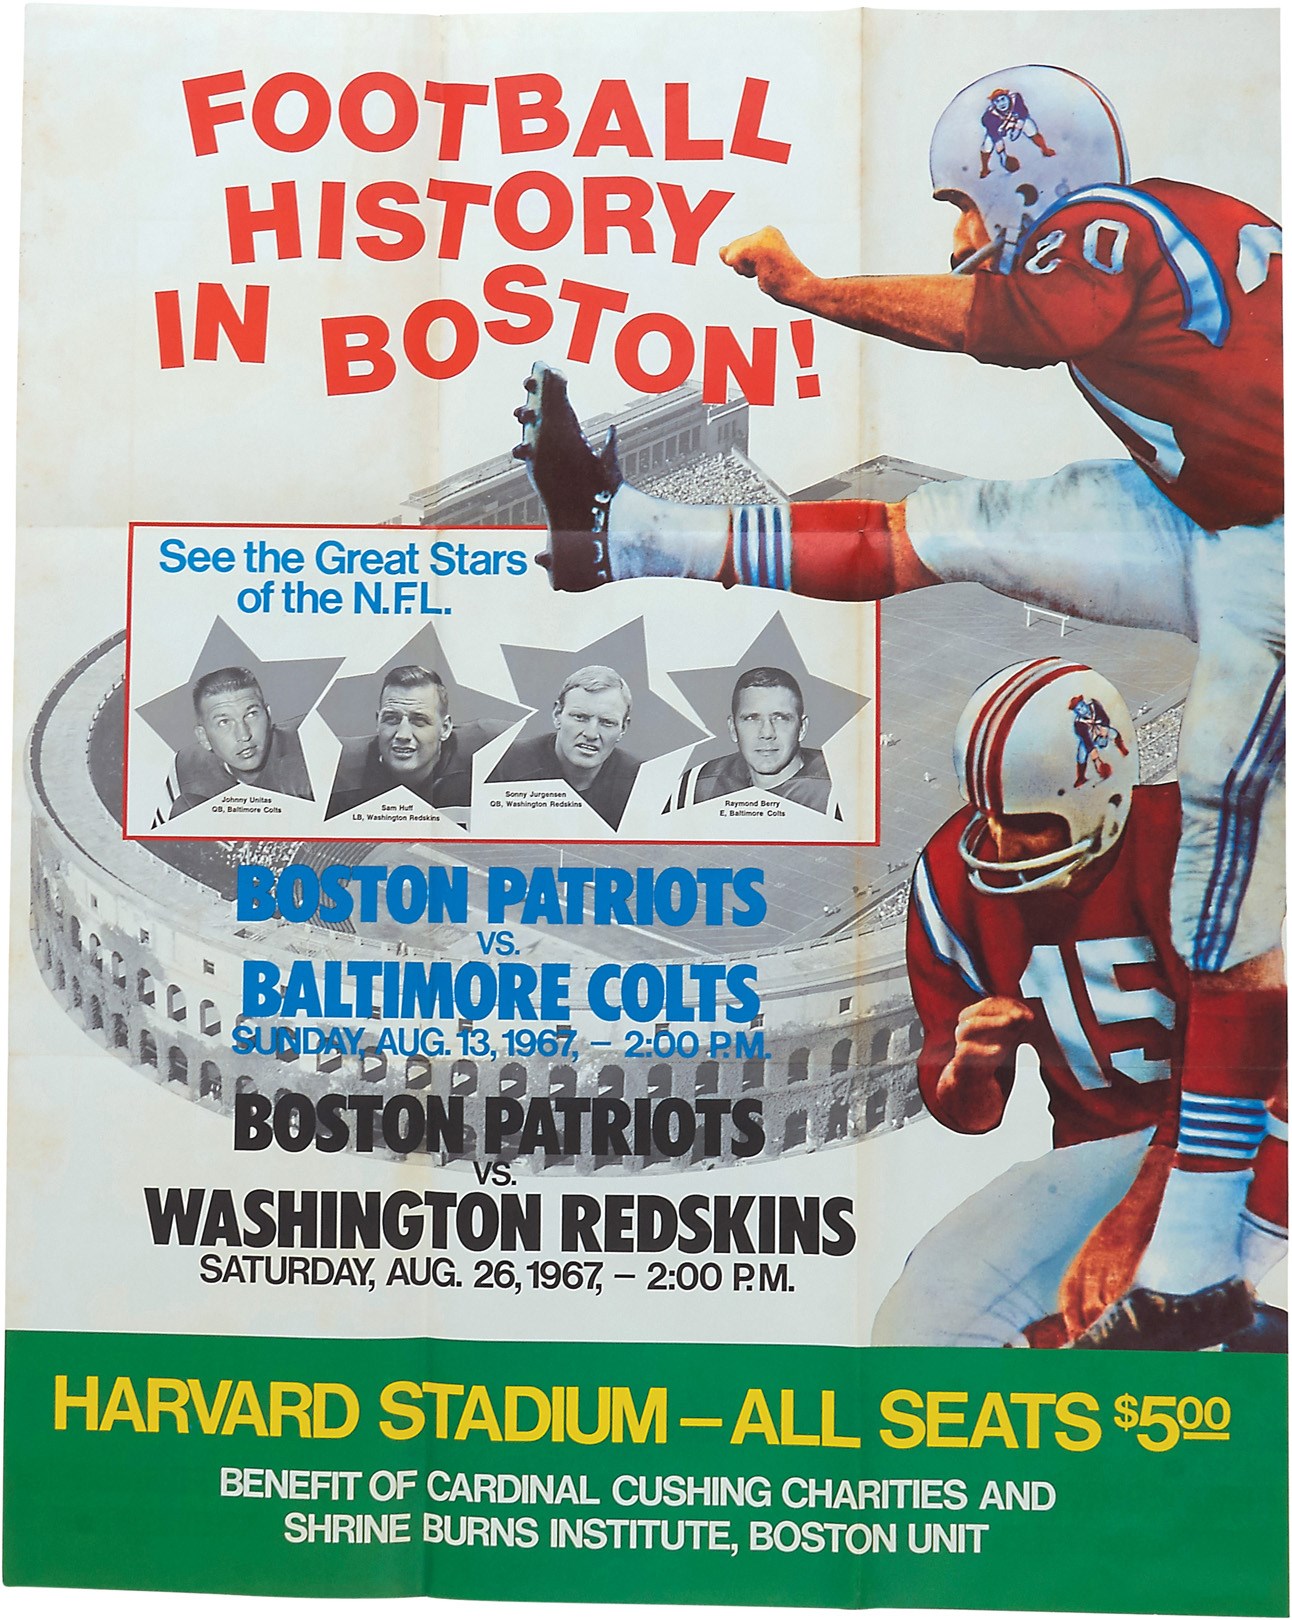 - 1967 Boston Patriots vs. Colts & Redskins NFL "Doubleheader" Advertising Poster